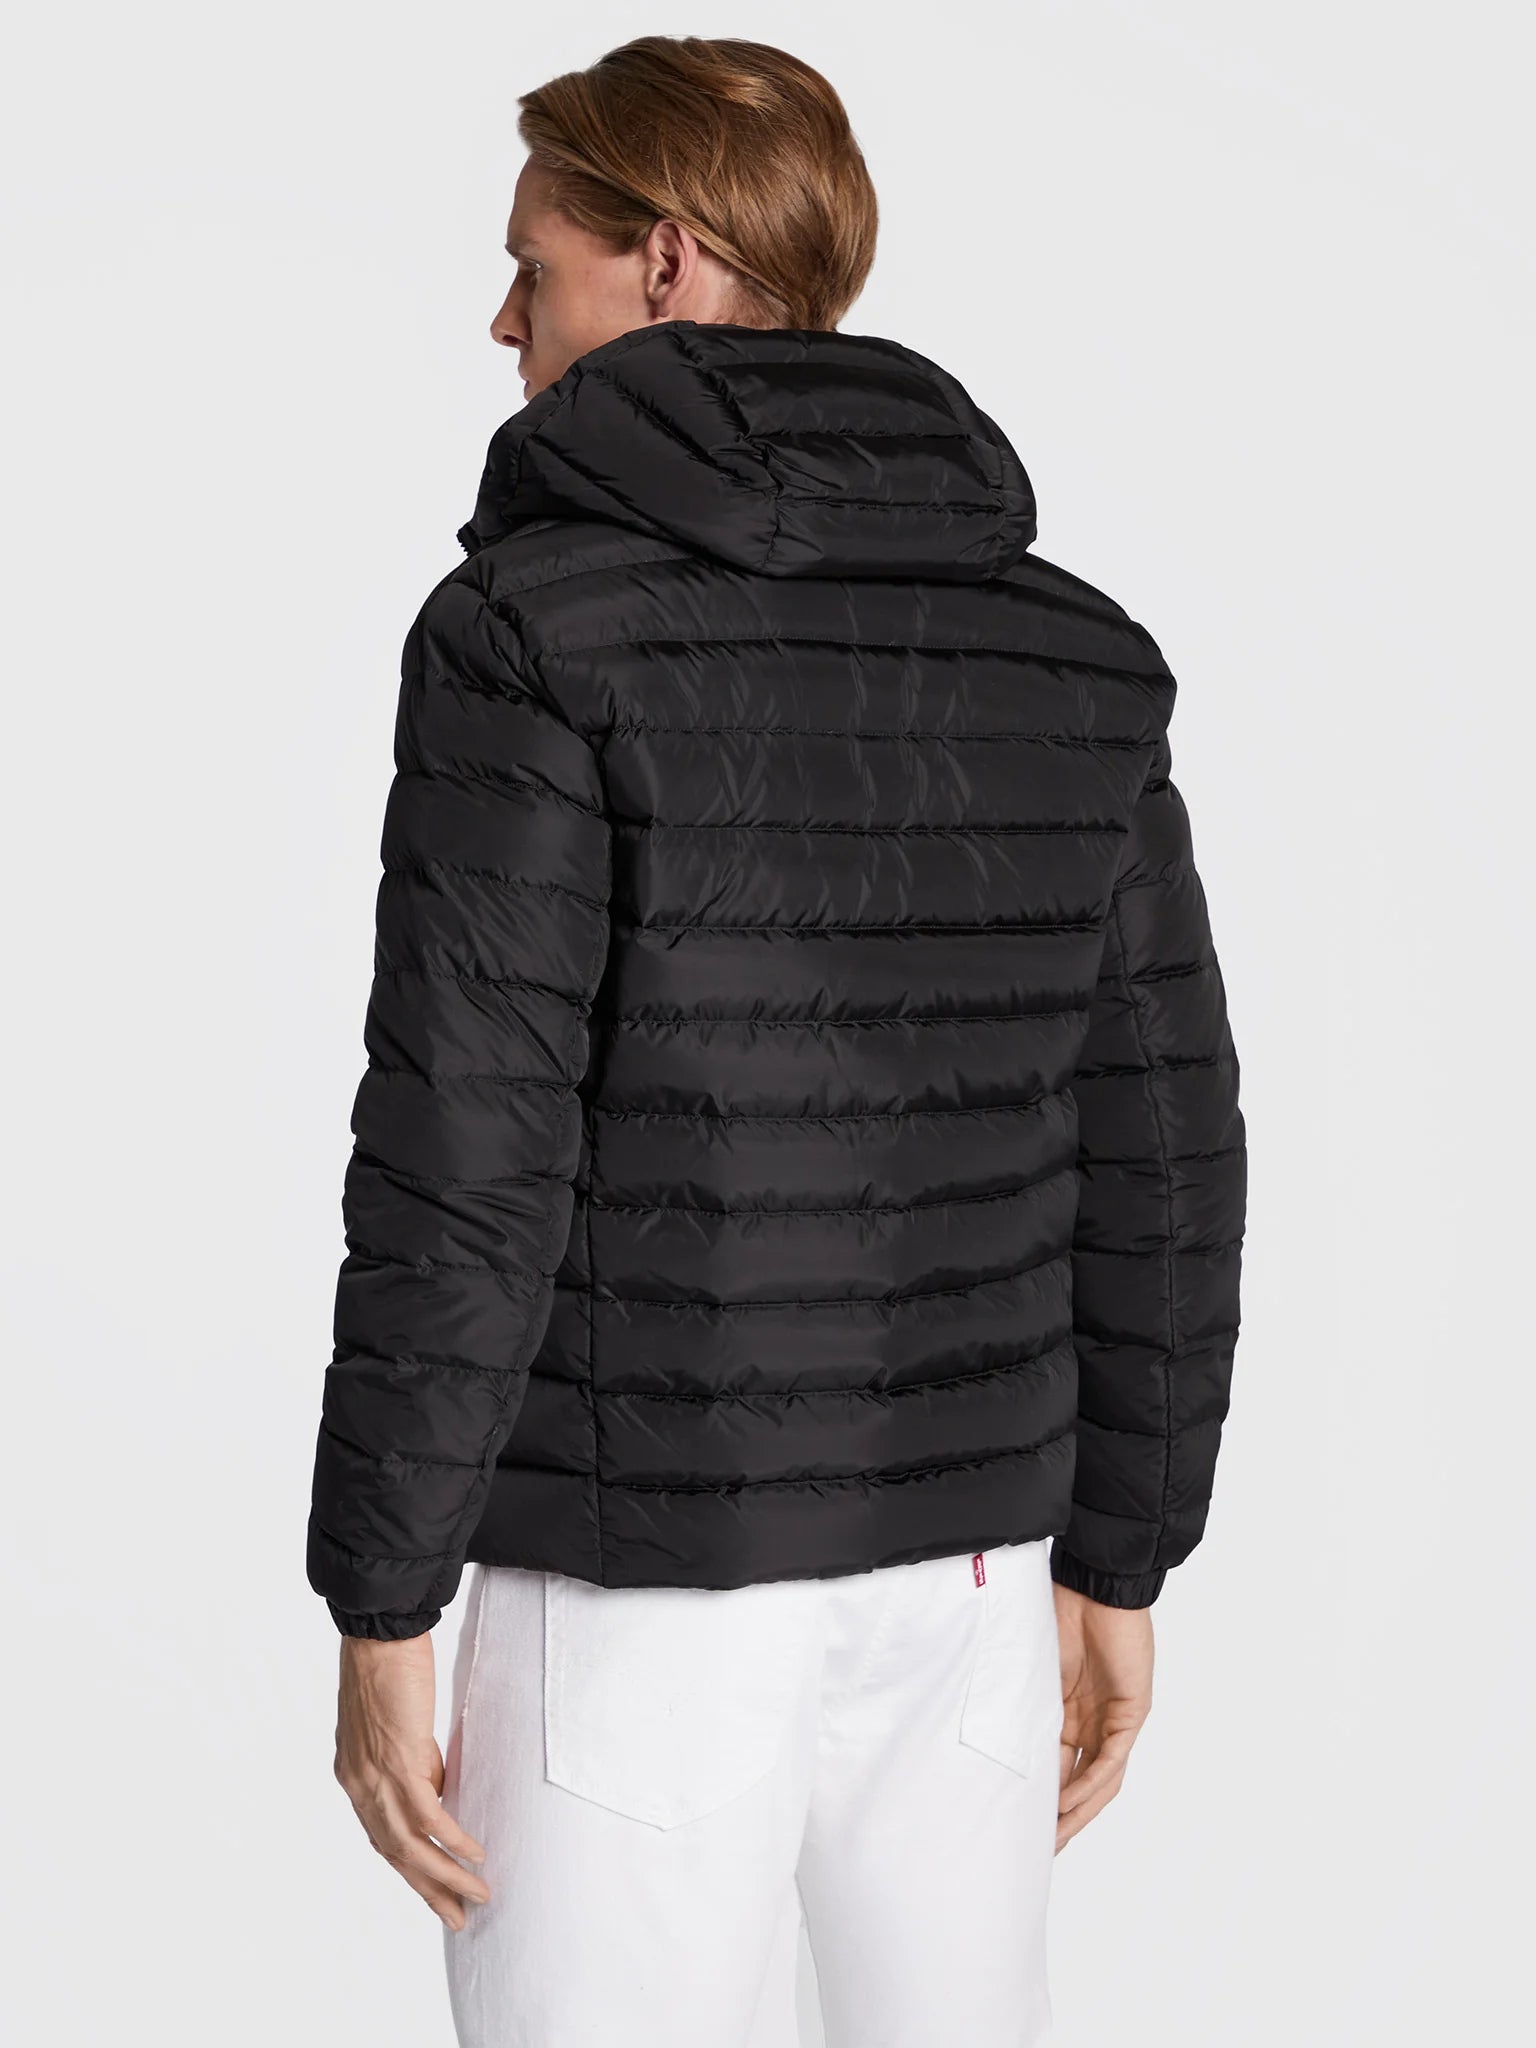 Refrigiwear Black Nylon Jacket - Fizigo